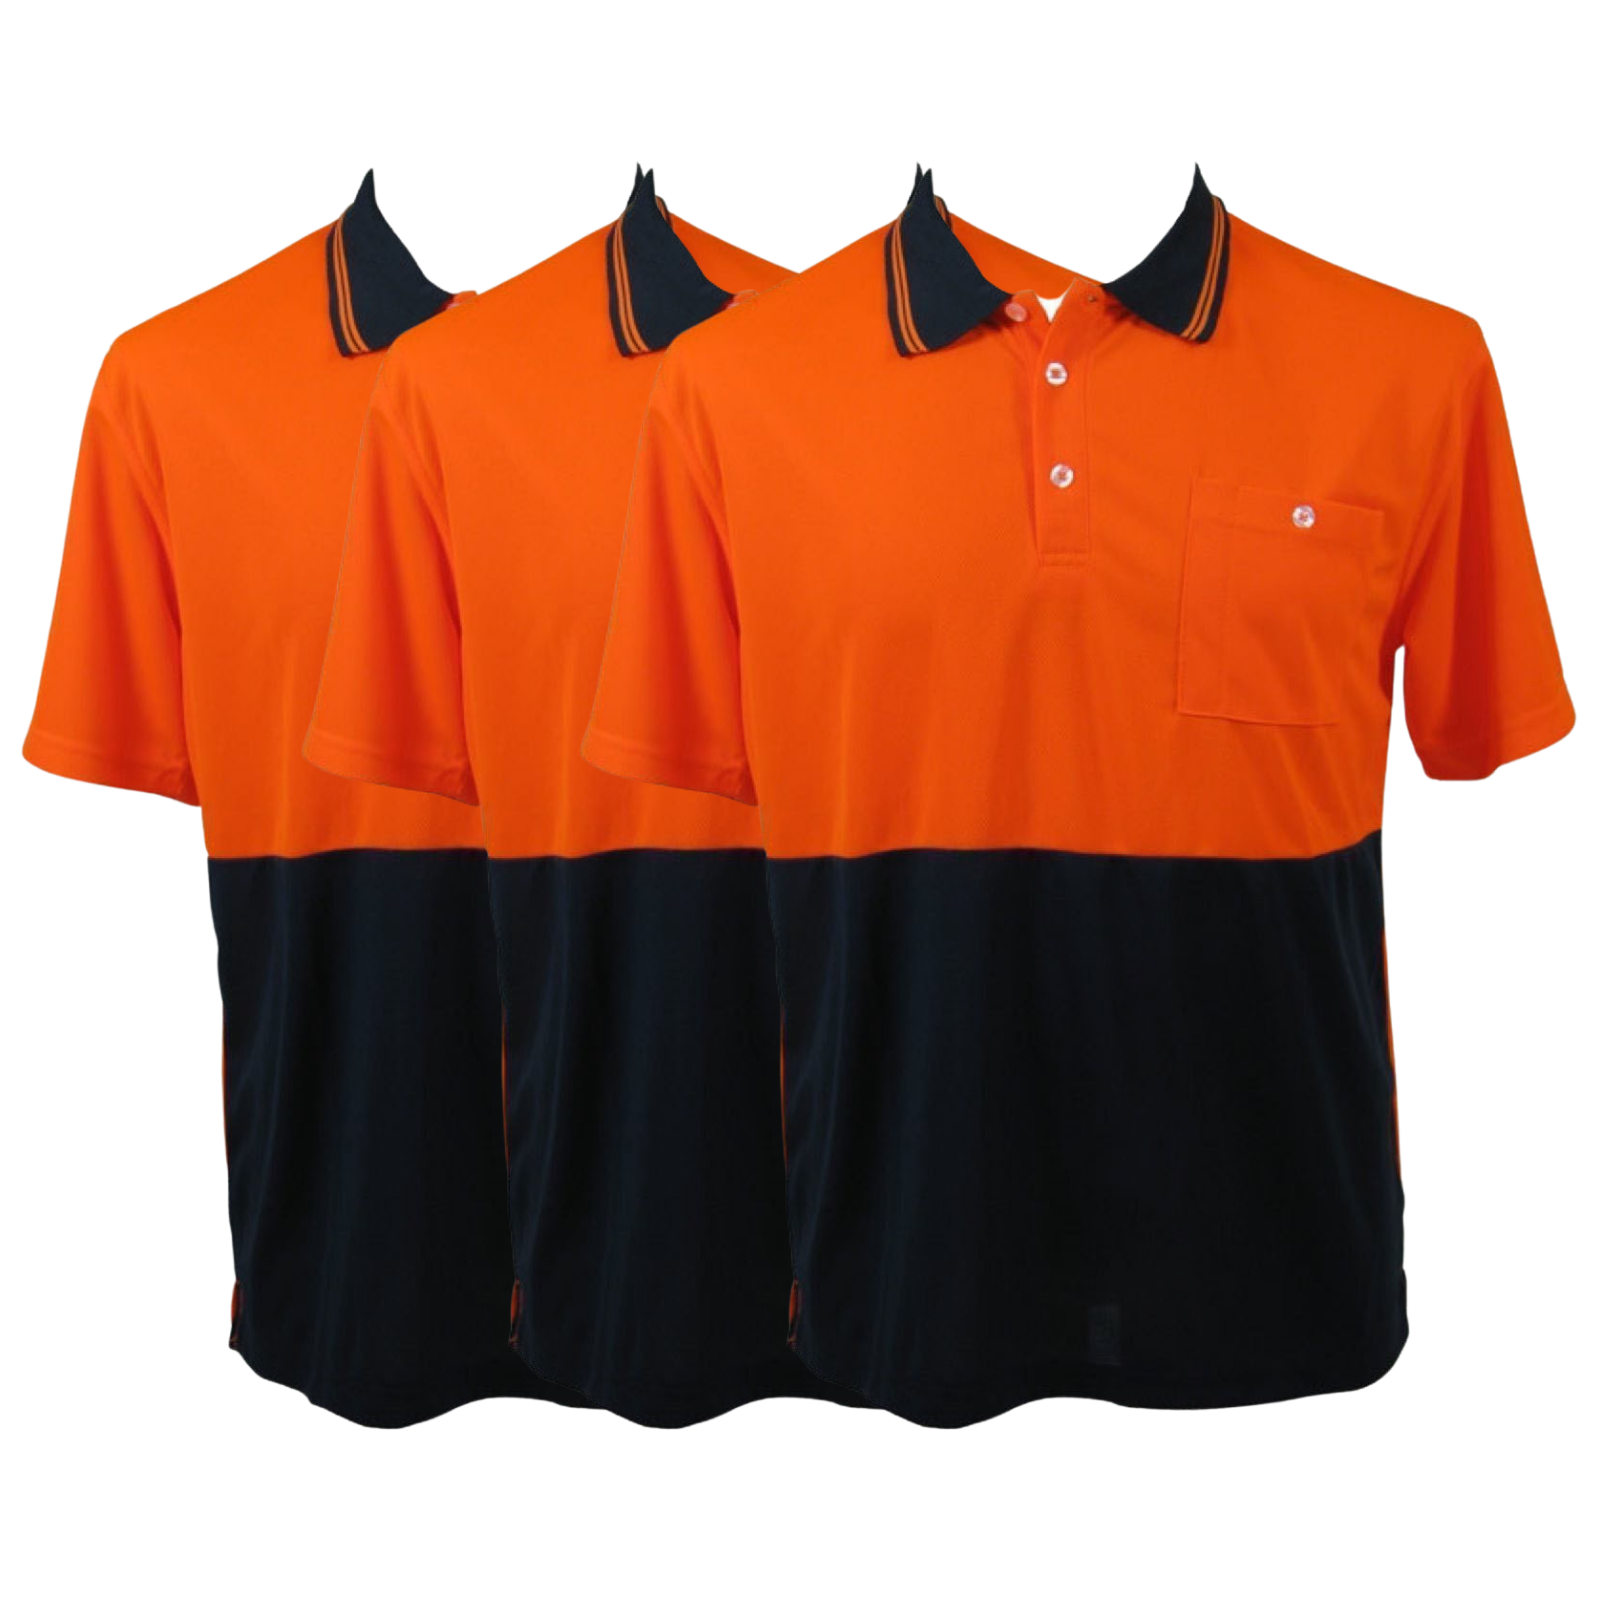 3x HI VIS Polo Shirt Top Tee Safety Workwear Short Sleeve Breathable Mesh BULK